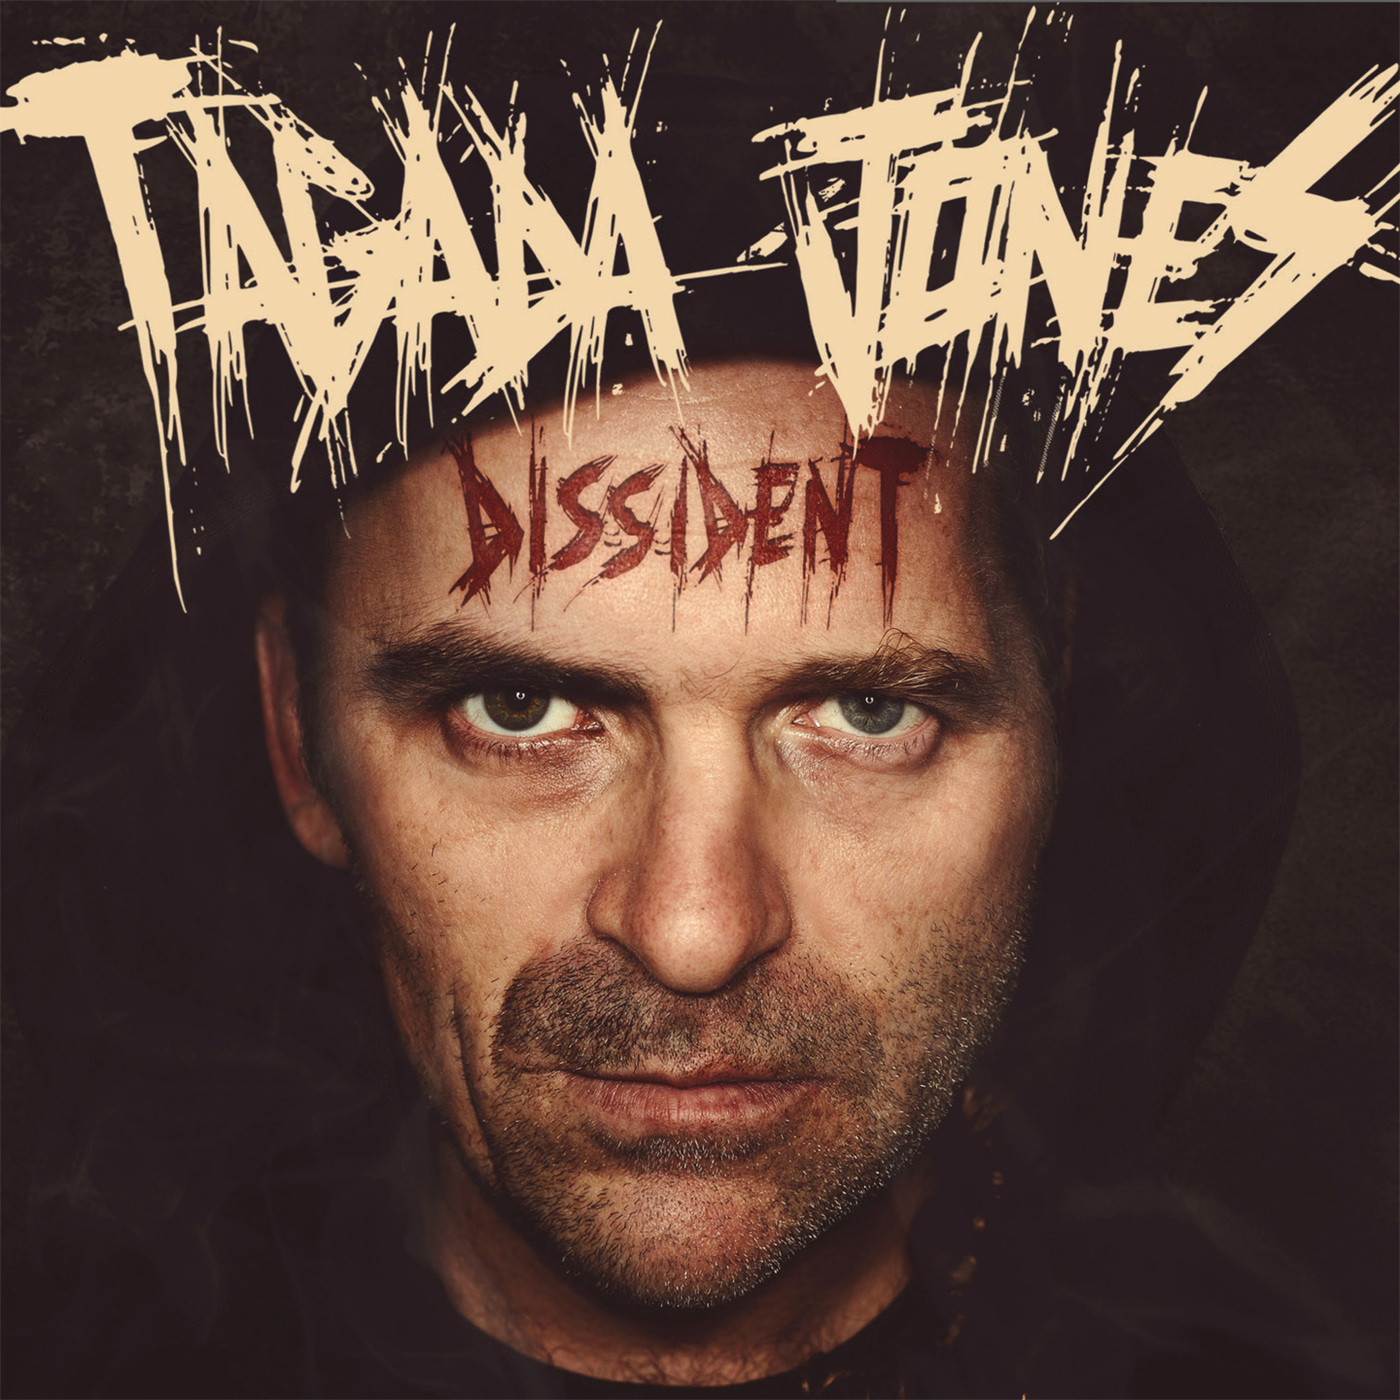 Tagada Jones - Dissident